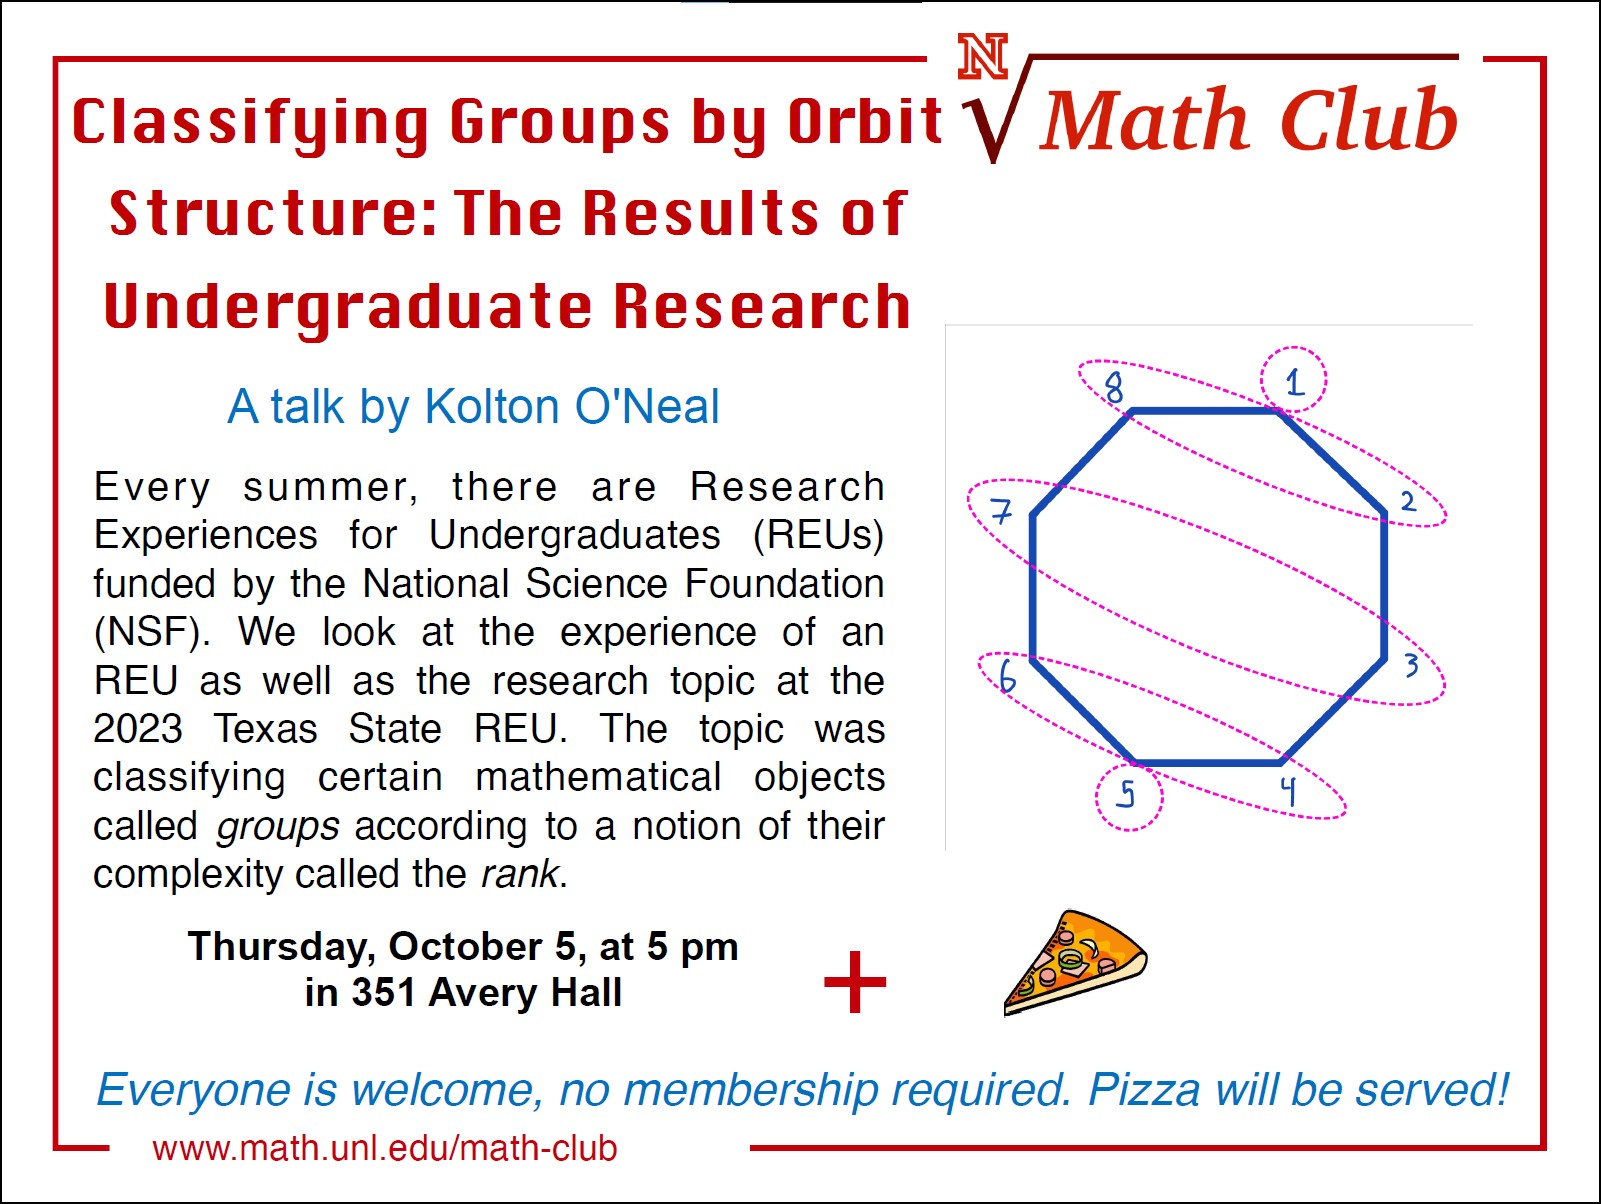 Math Club - Thursday, October 5th at 5 pm!